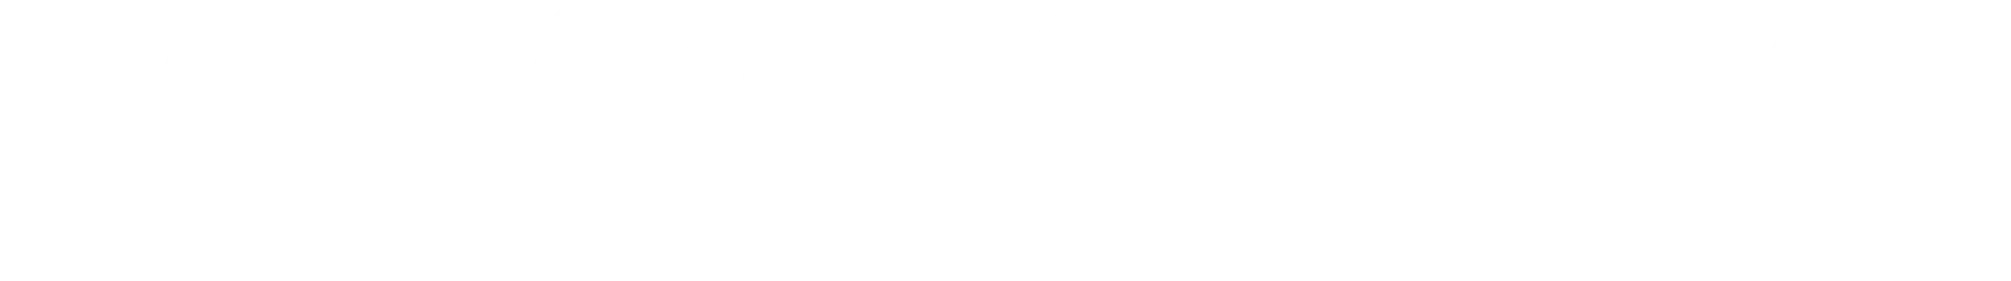 stylish font generator logo